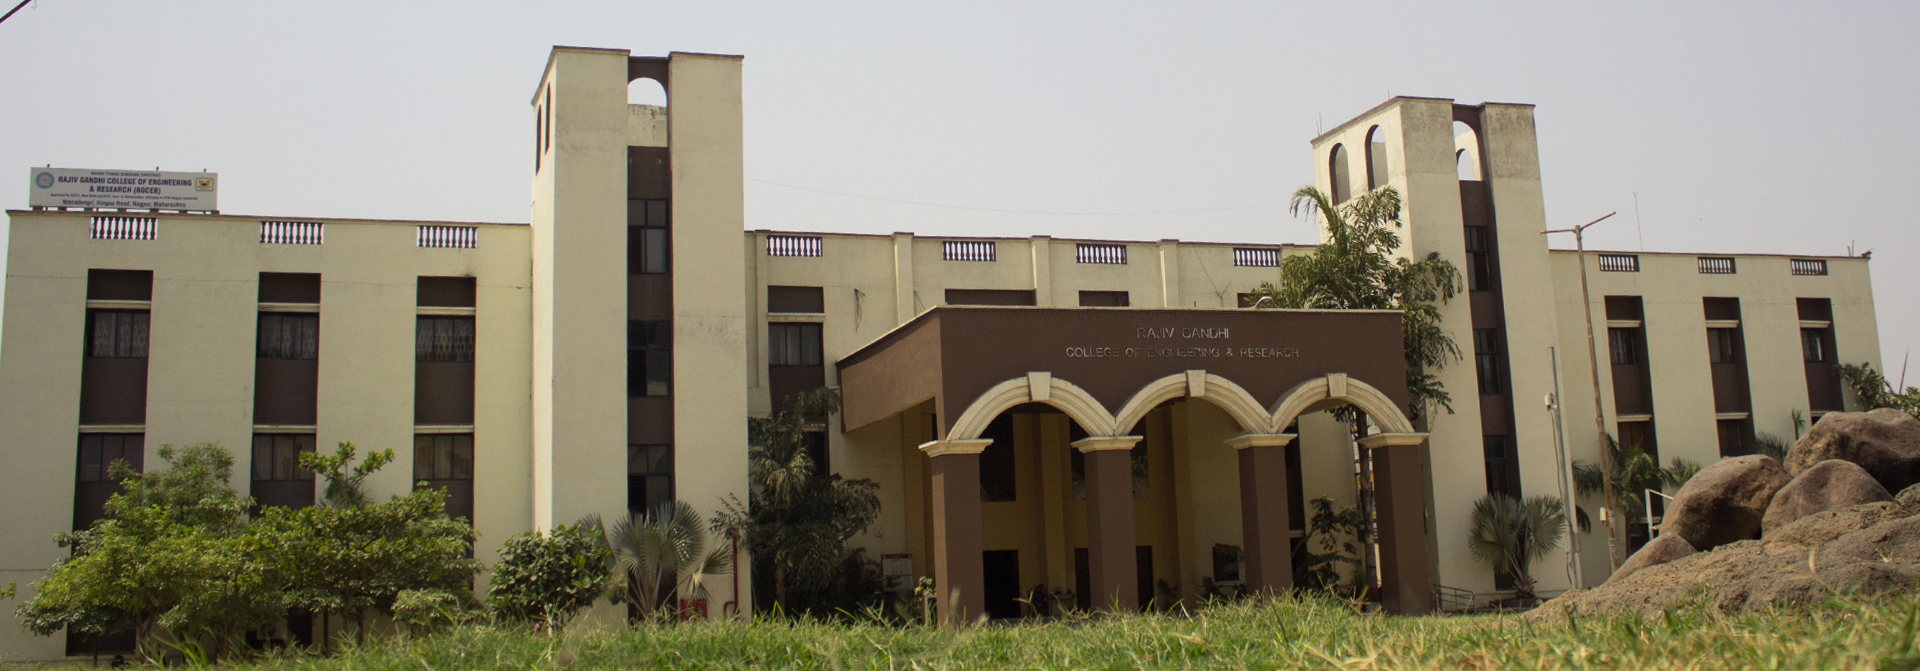 Rajiv Gandhi College Of Engineering And Research, Nagpur Image